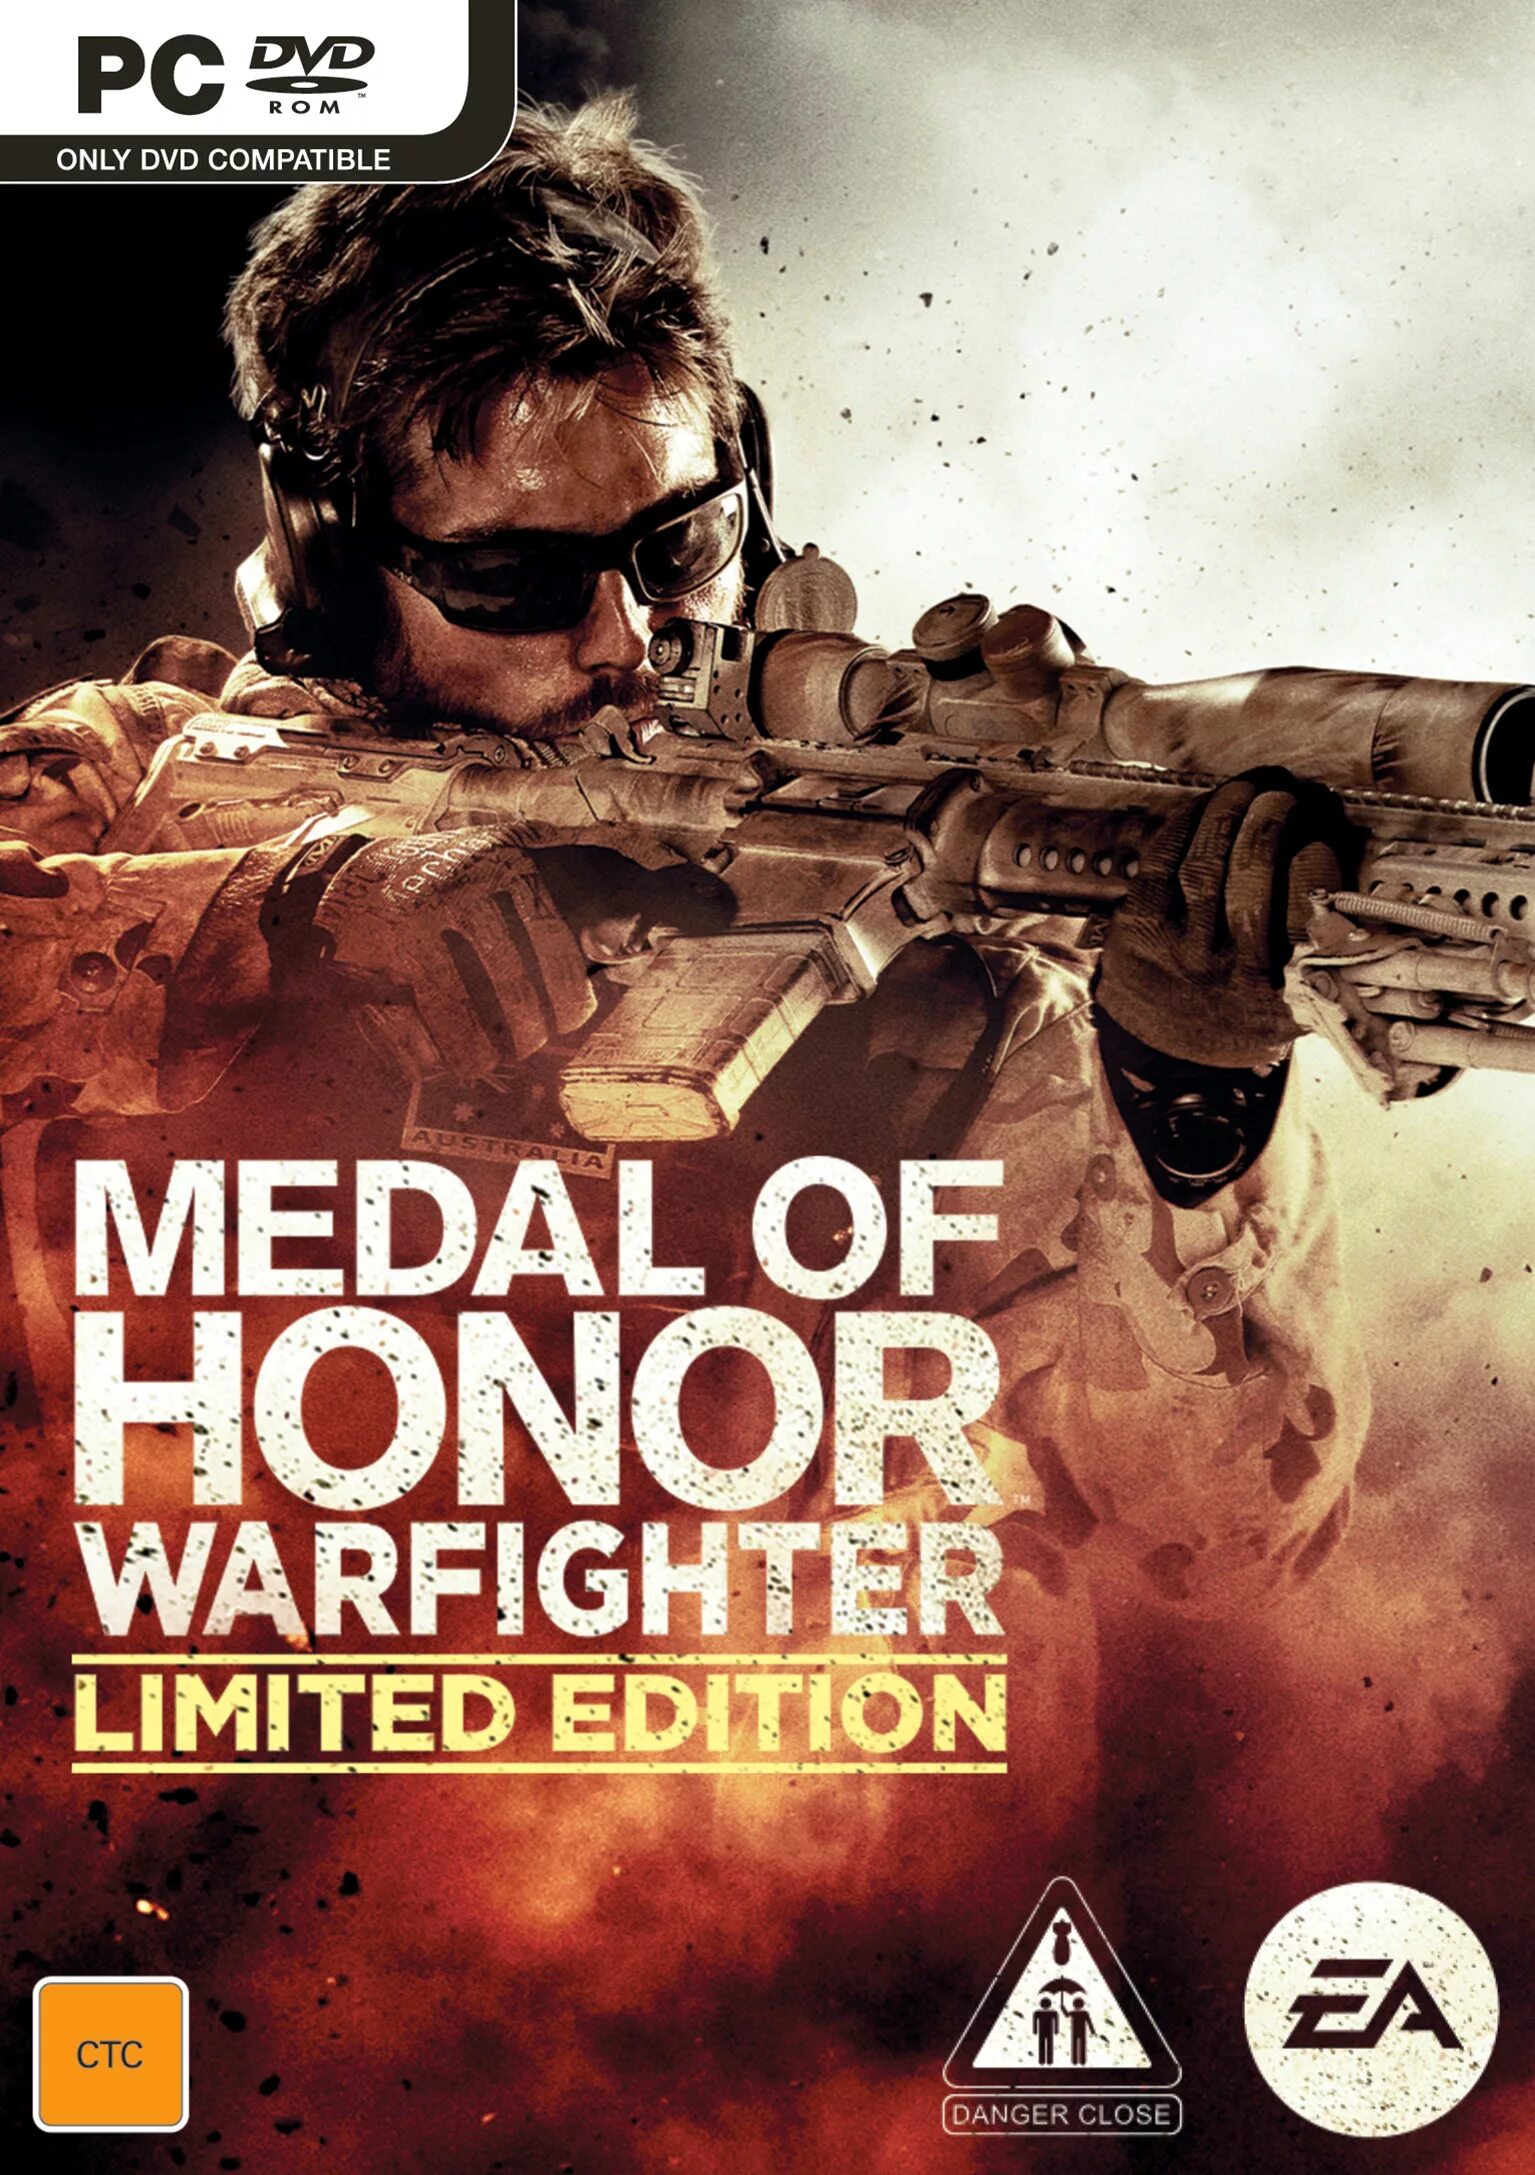 Medal 2012. Medal of Honor Warfighter Xbox 360. Medal of Honor игра обложка. Медаль оф хонор 2012. Медаль за отвагу игра 2012.